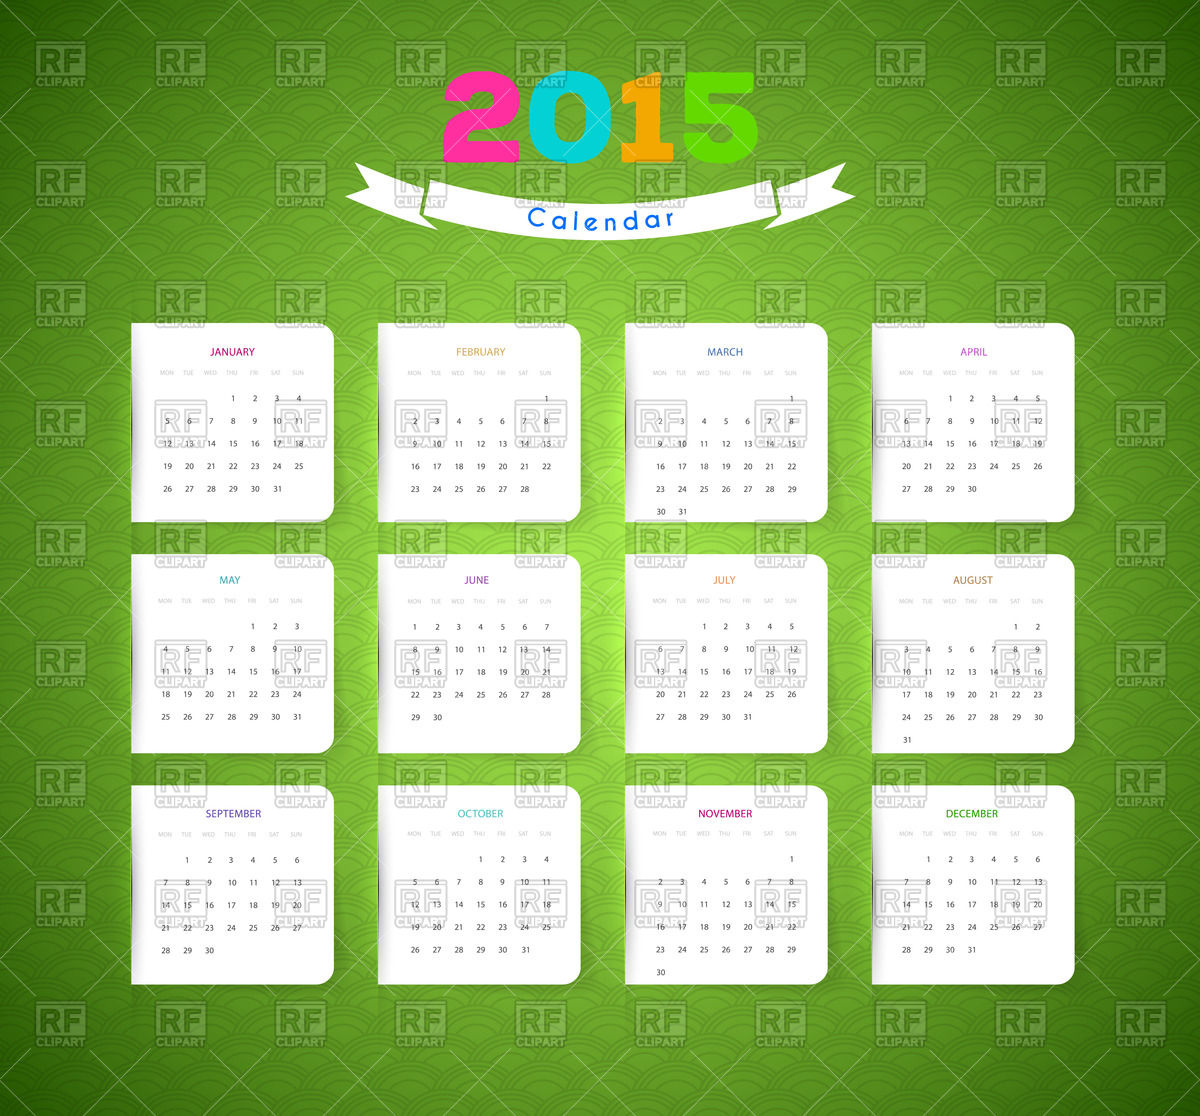 Sep 2015 Clip Art   New Calendar Template Site